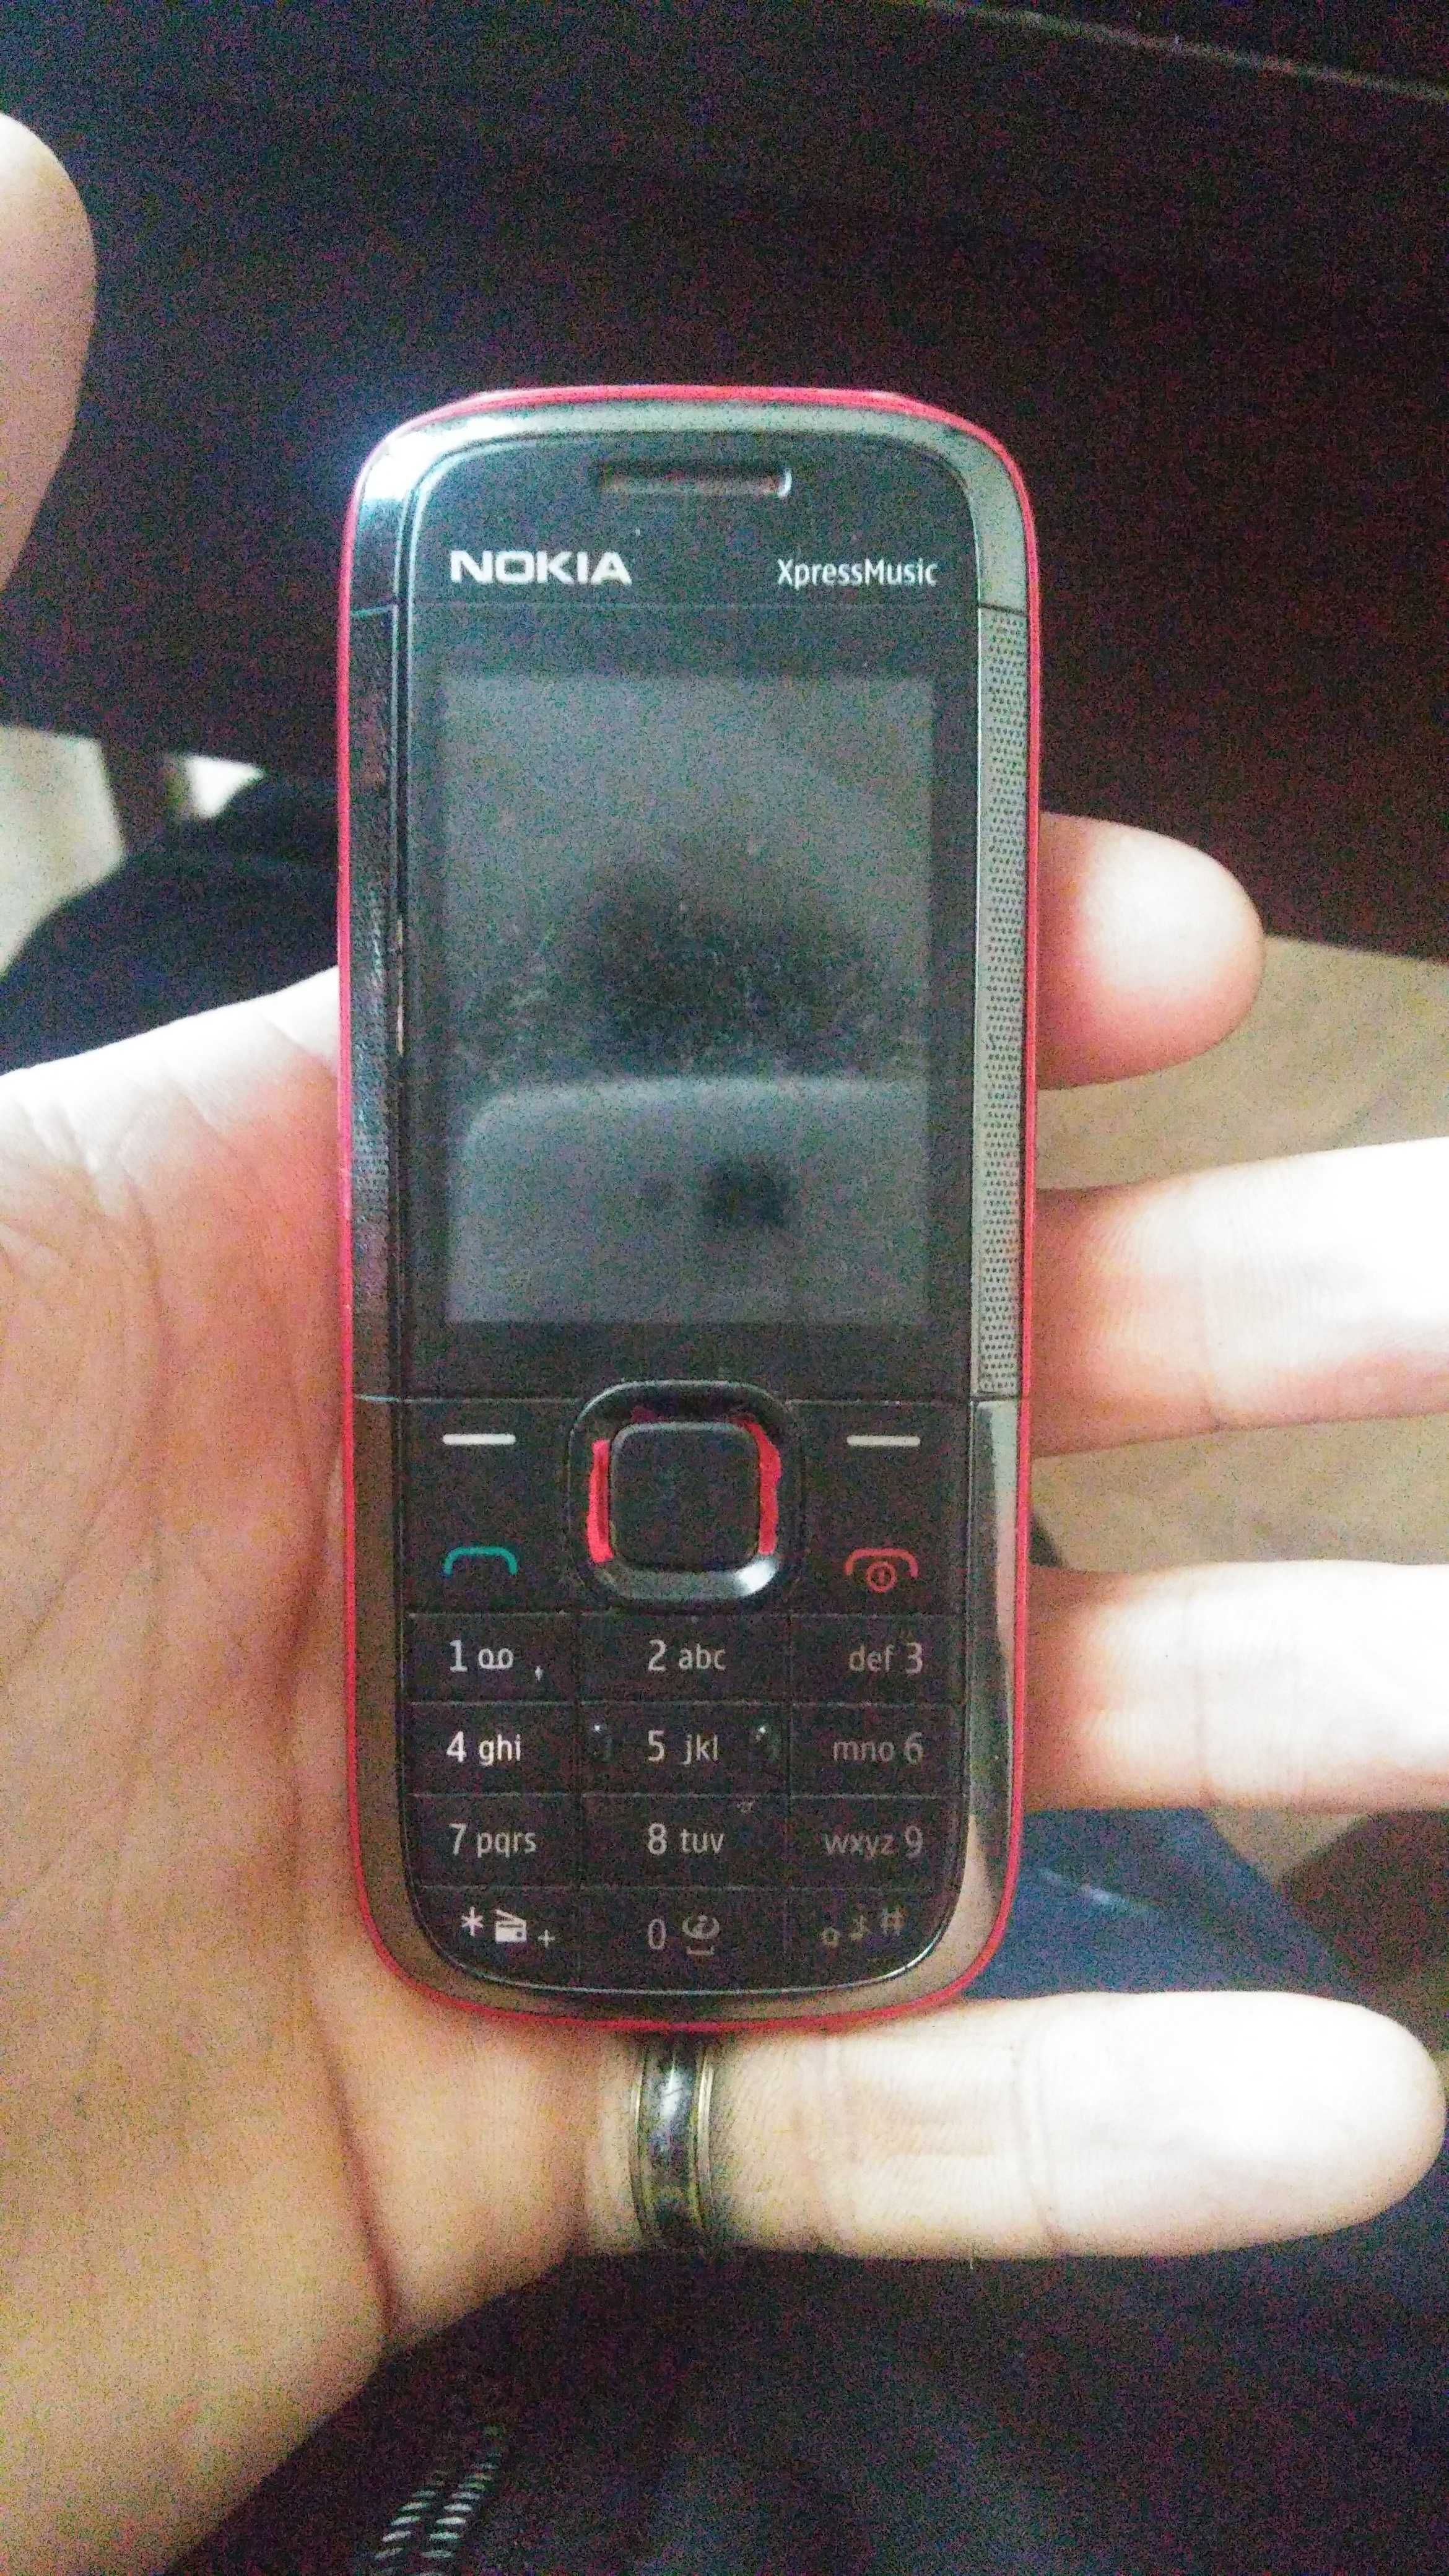 Nokia XpressMusic RM-495